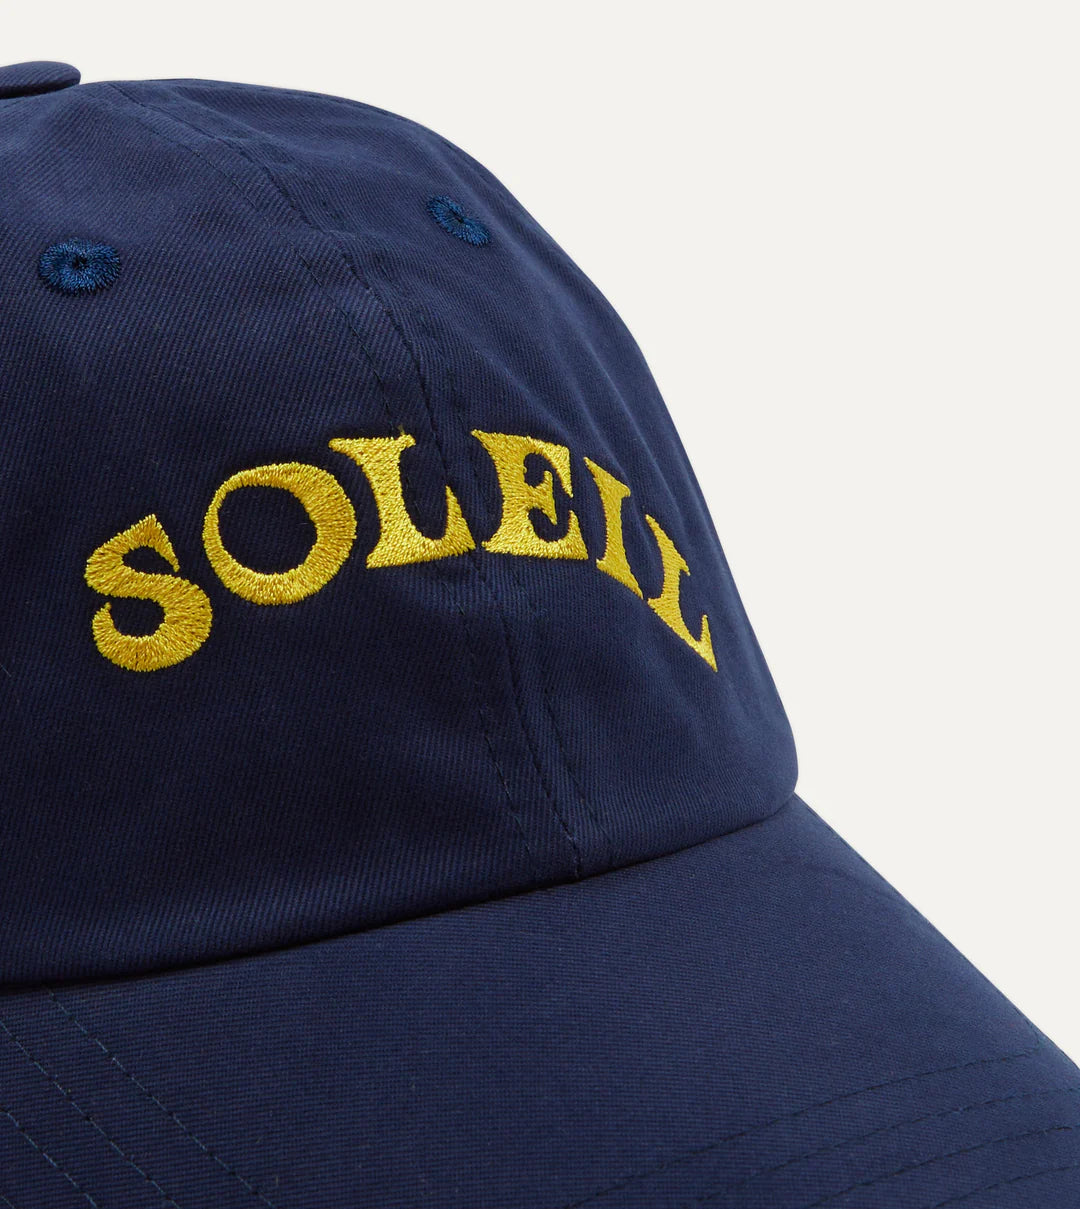 Soleil Baseball Cap - Navy